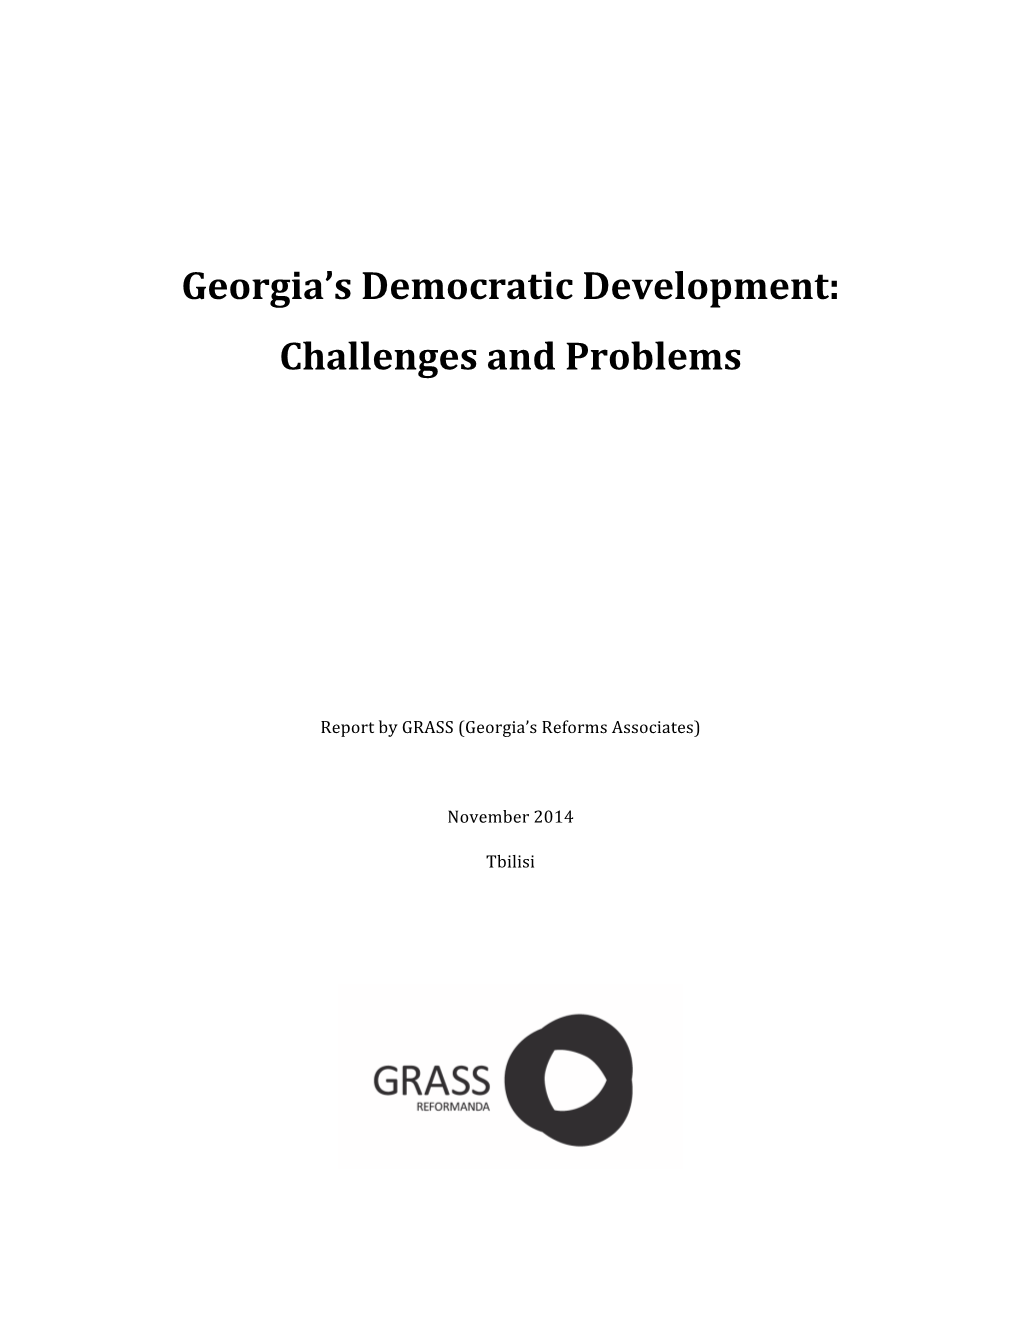 Georgia's Democratic Development: Challenges and Problems